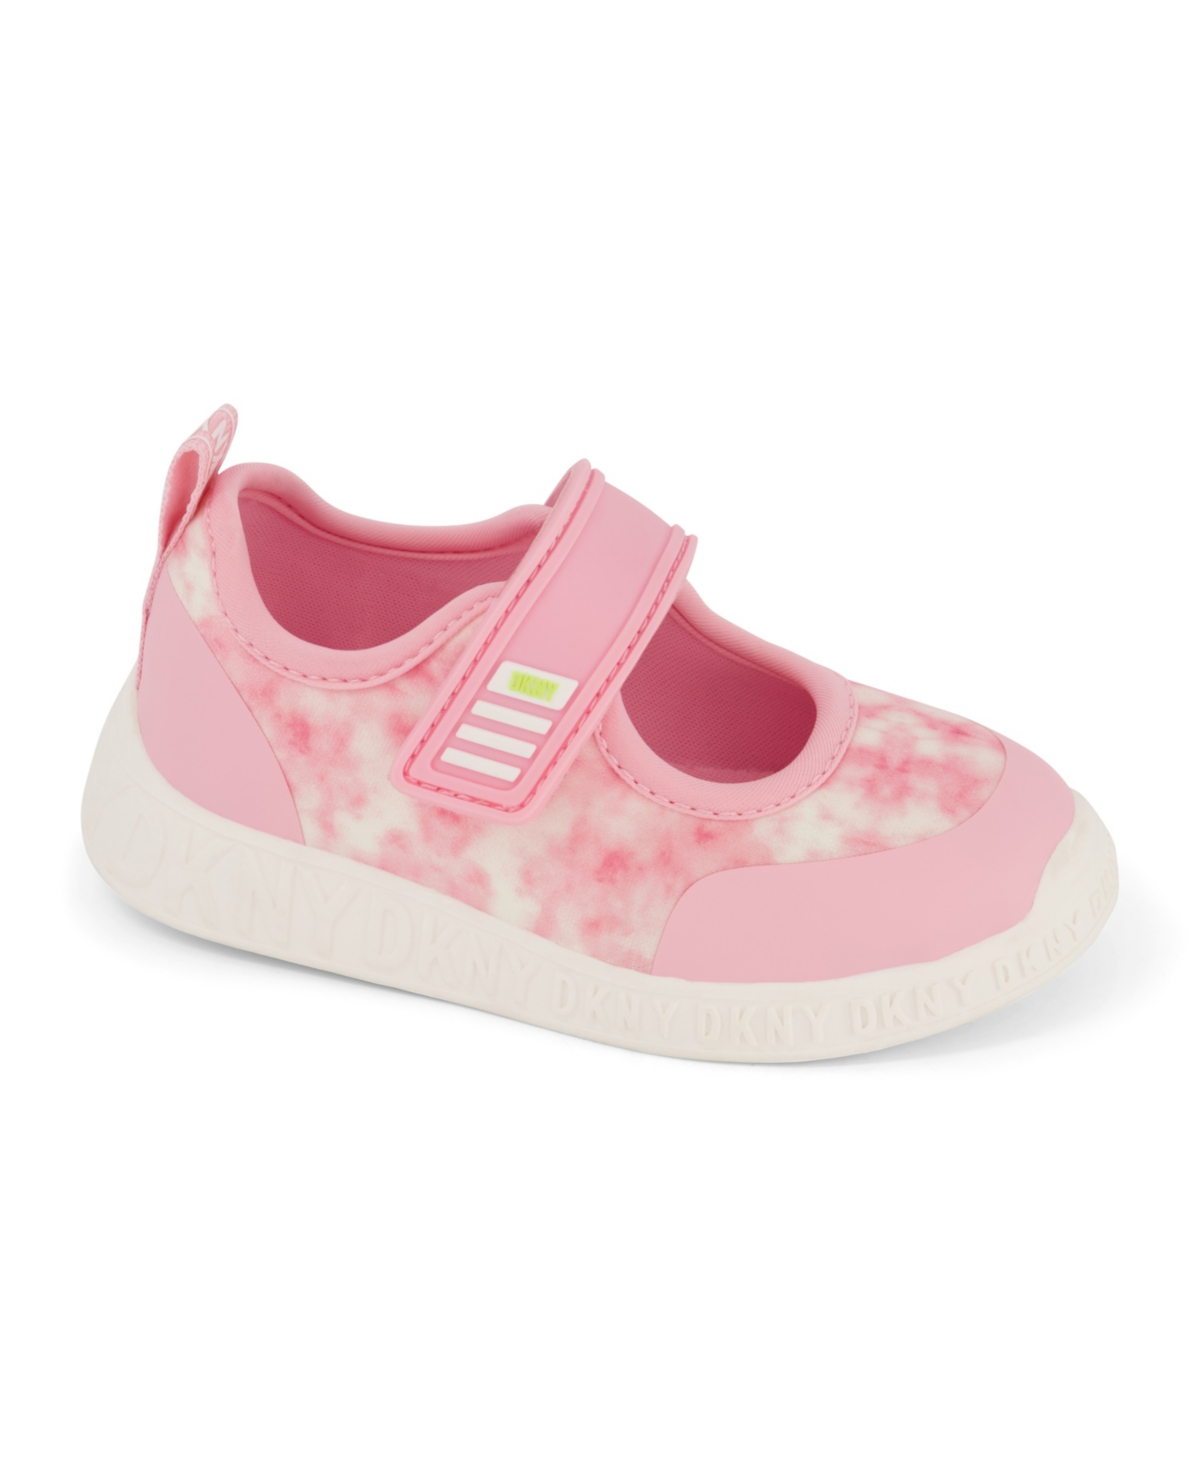 Dkny Toddler Girls Slip On Sneakers In Pink